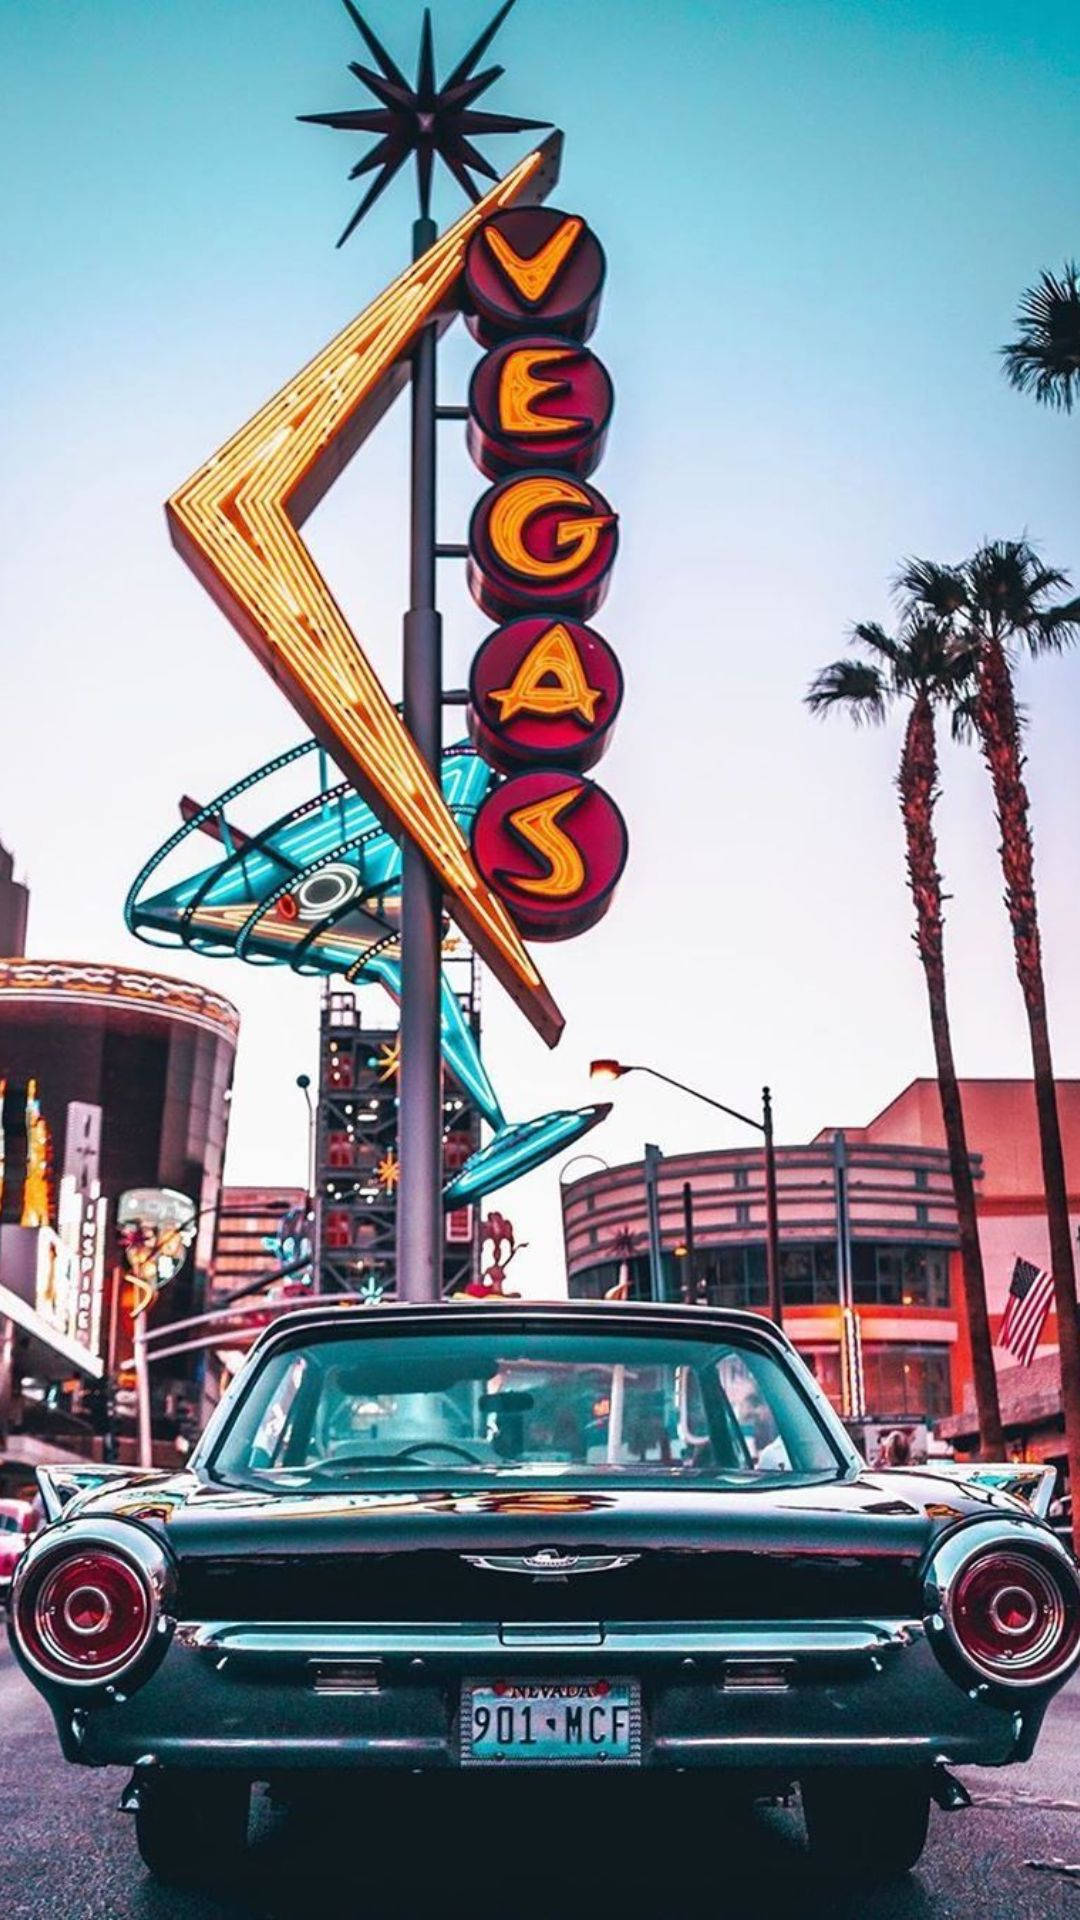 100+] Las Vegas Iphone Wallpapers